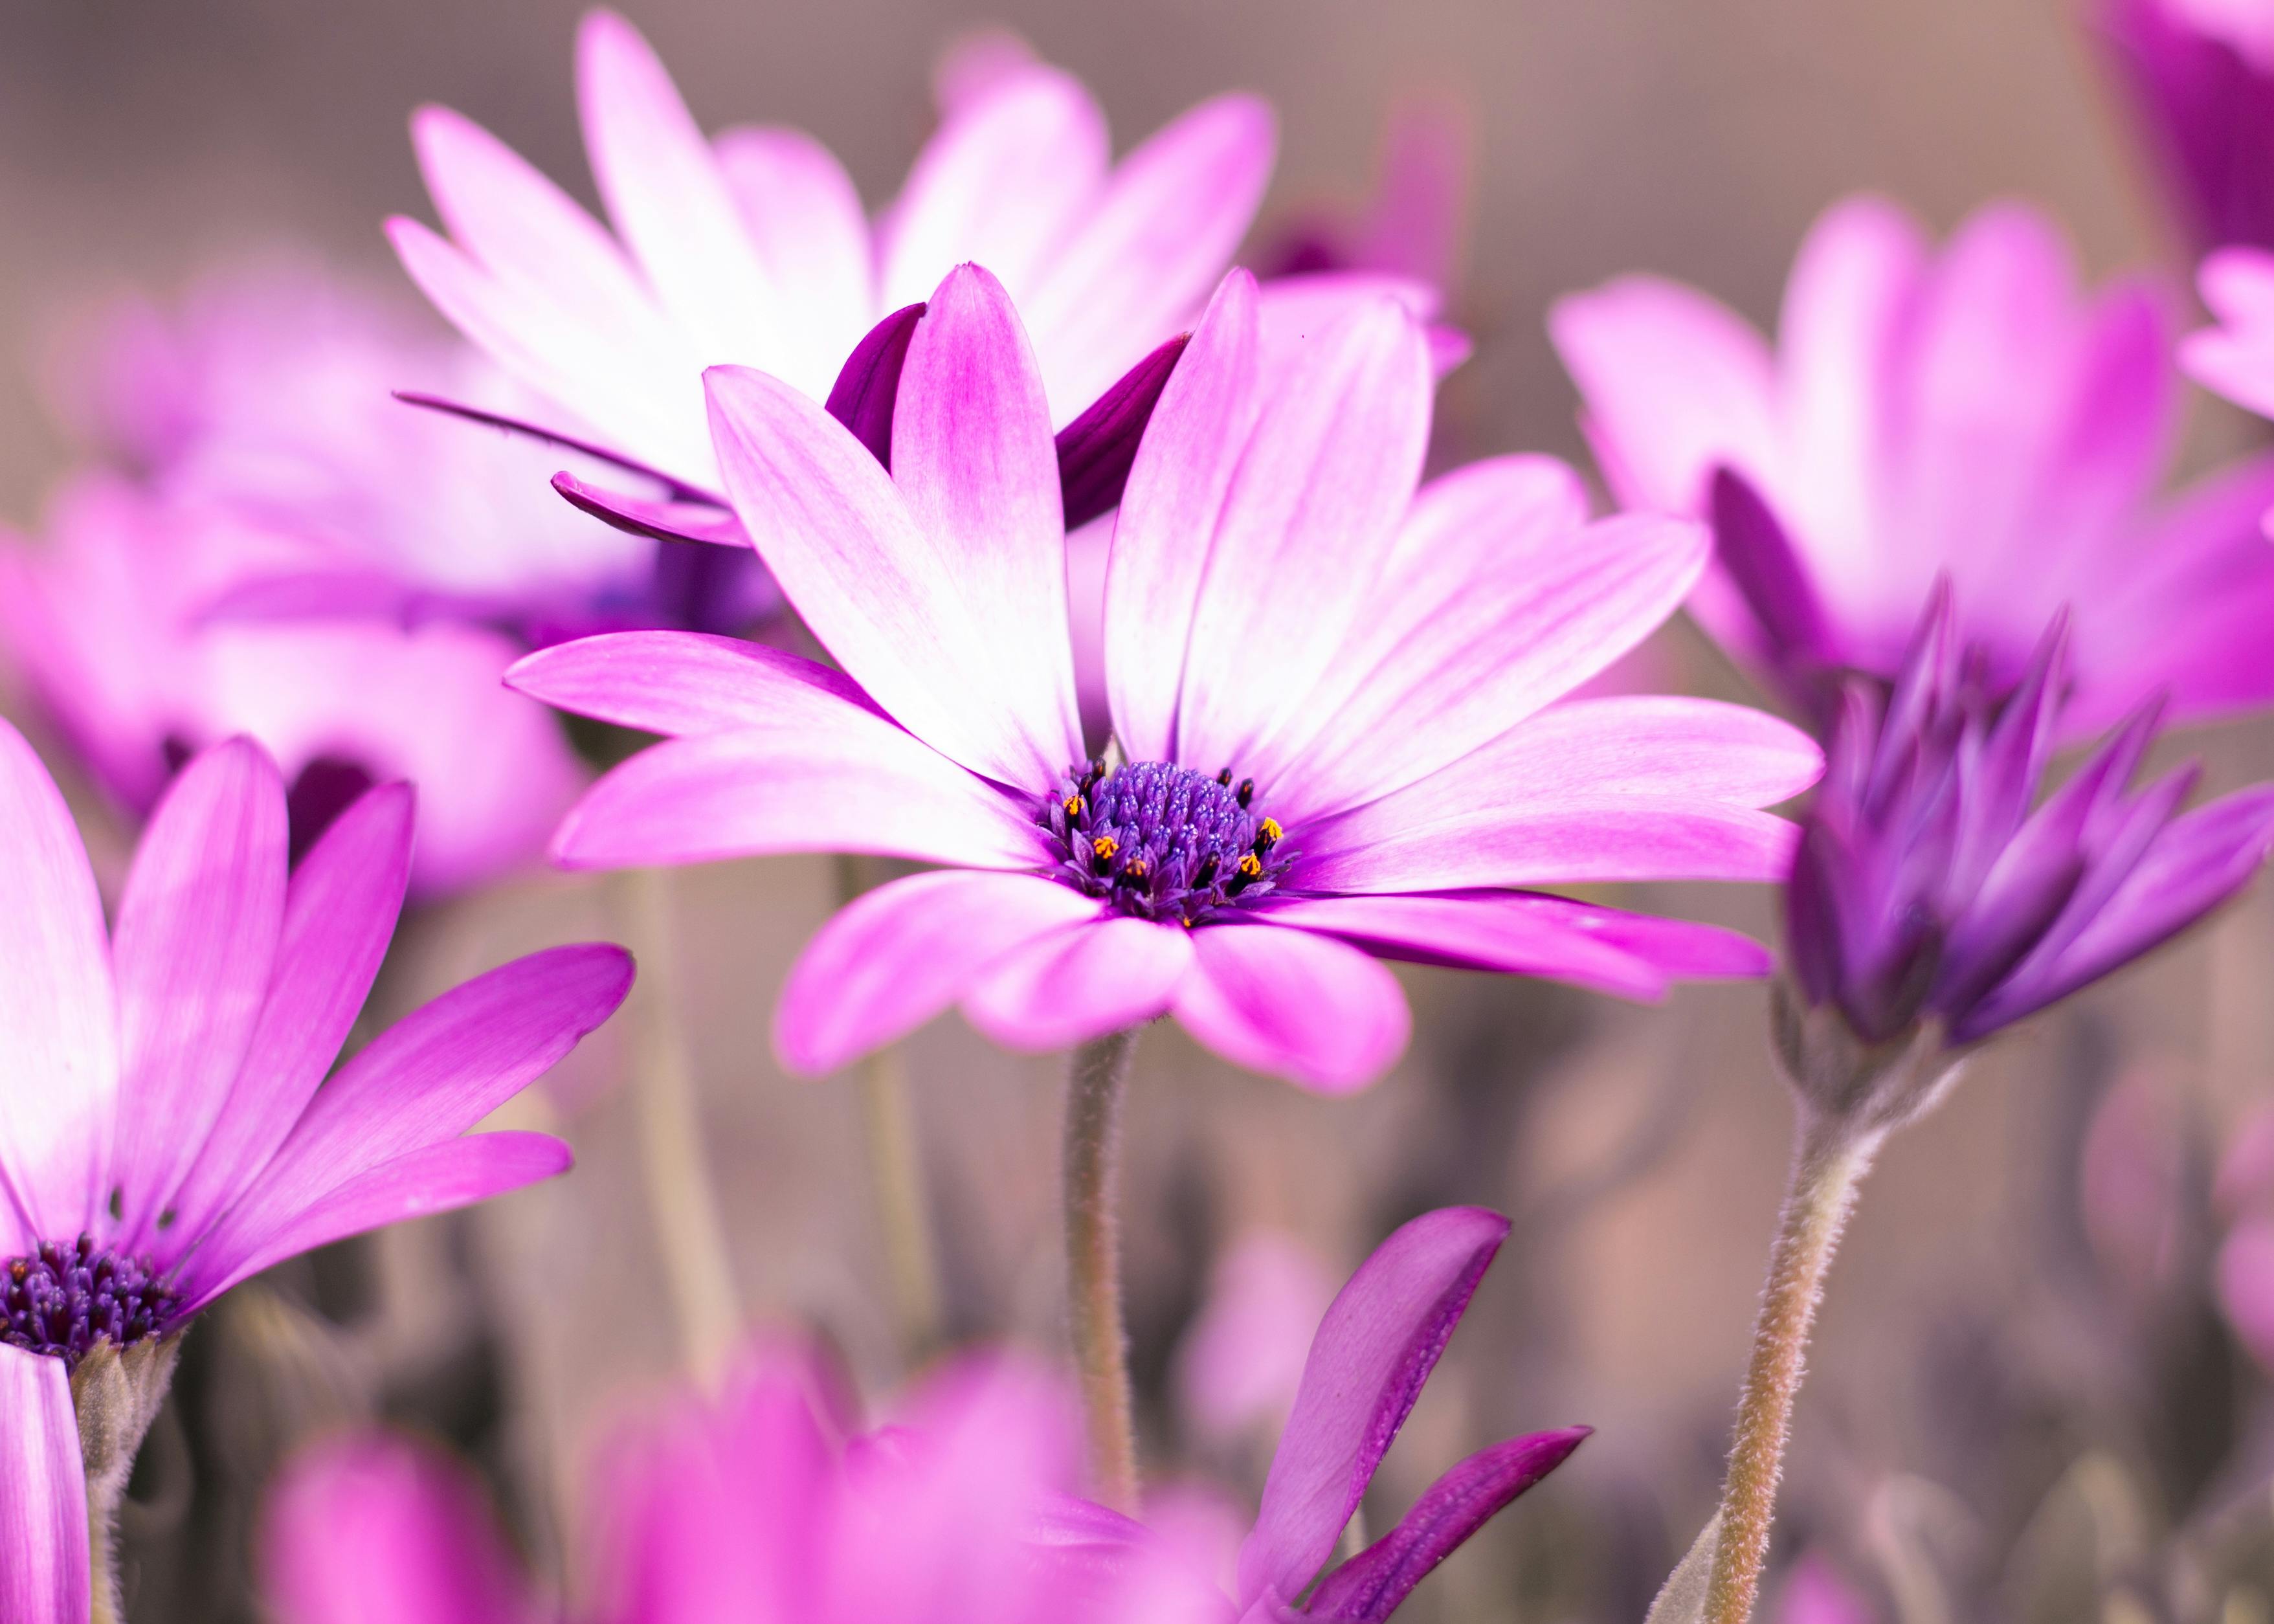 Selective Photo of Purple Daisy Flowers · Free Stock Photo